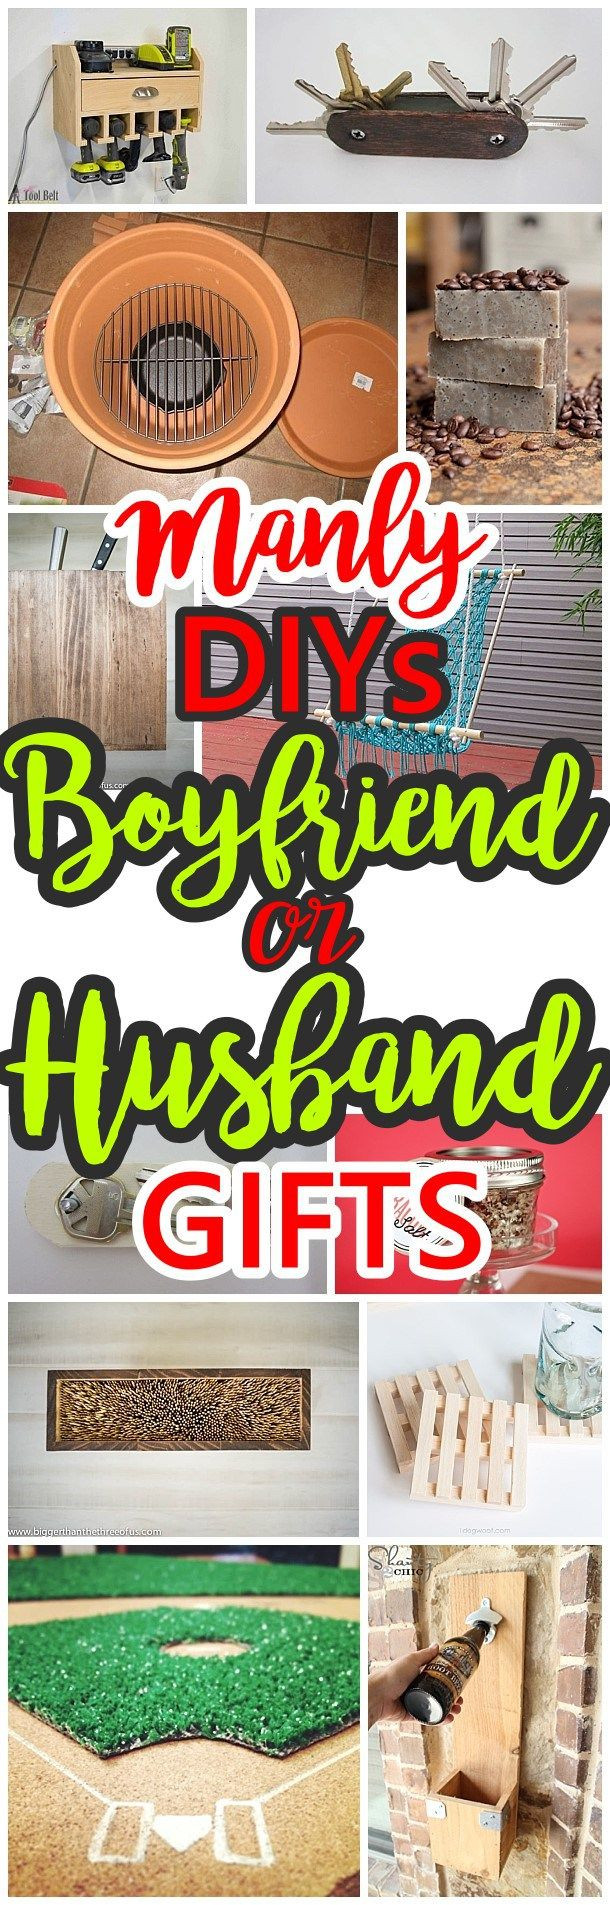 DIY Christmas Gift For Brother
 Best 25 Men ts ideas on Pinterest